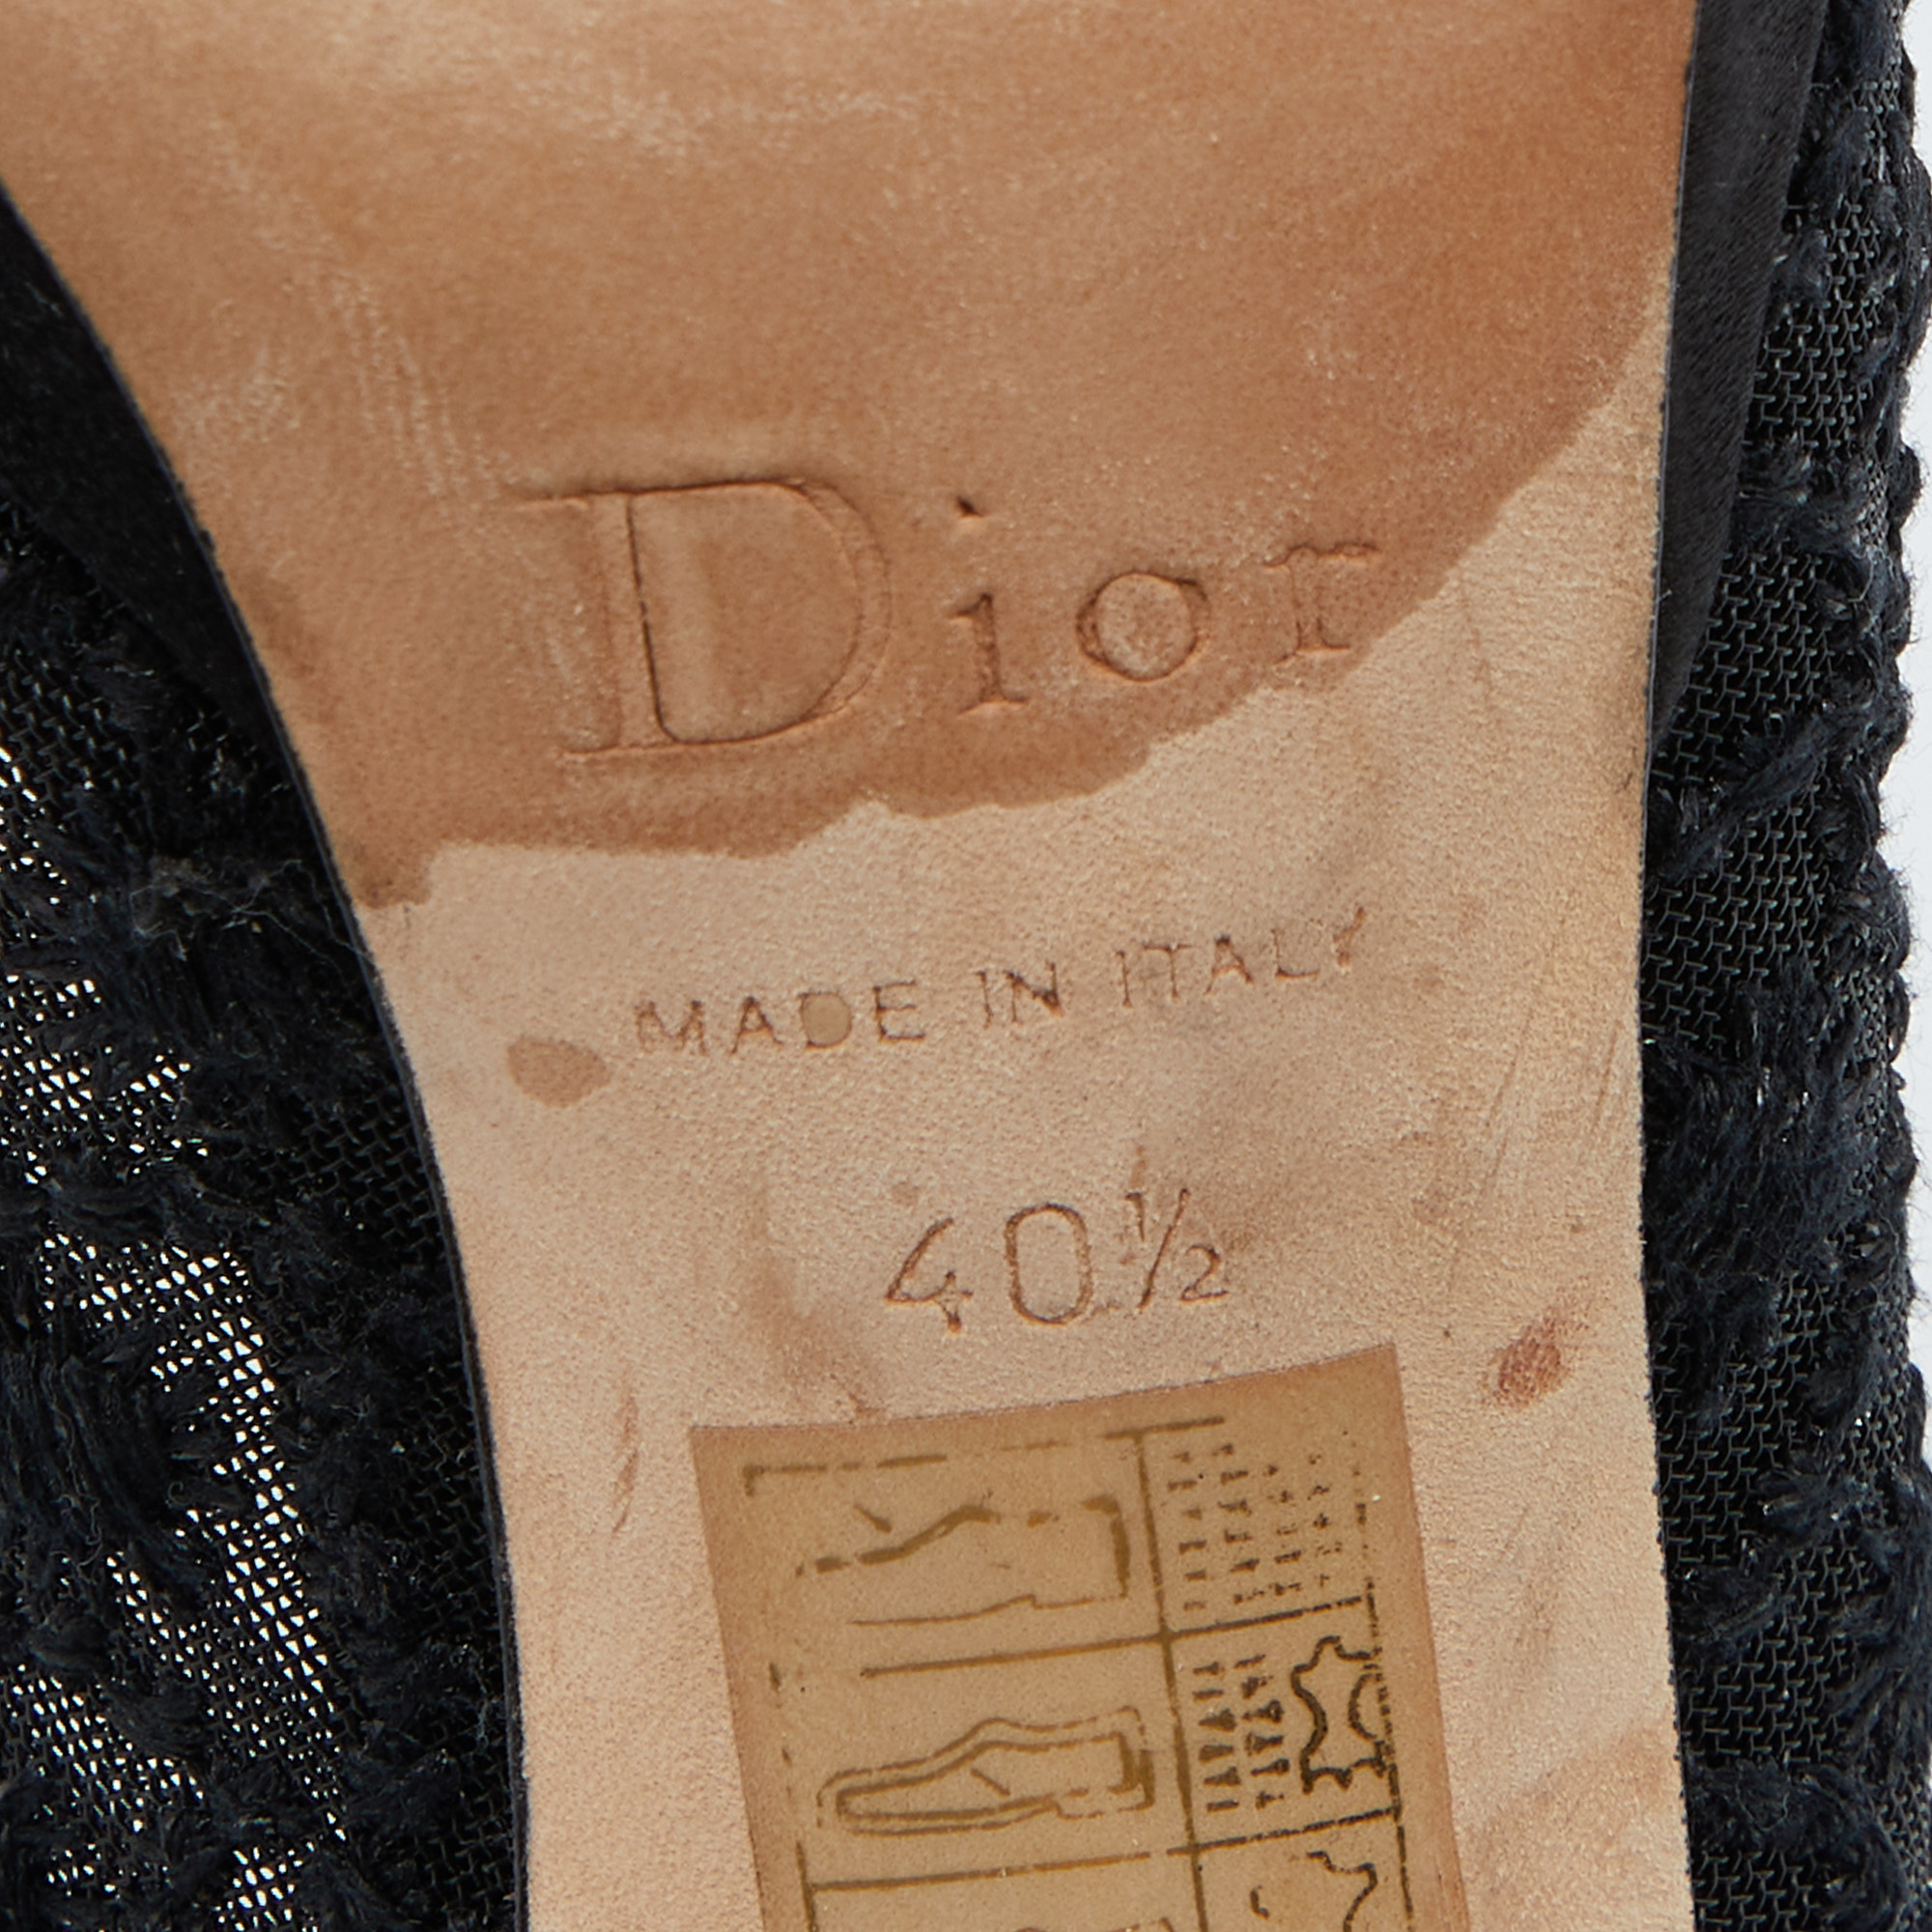 Dior Black Mesh And Satin Bow Peep Toe Platform Pumps Size 40.5